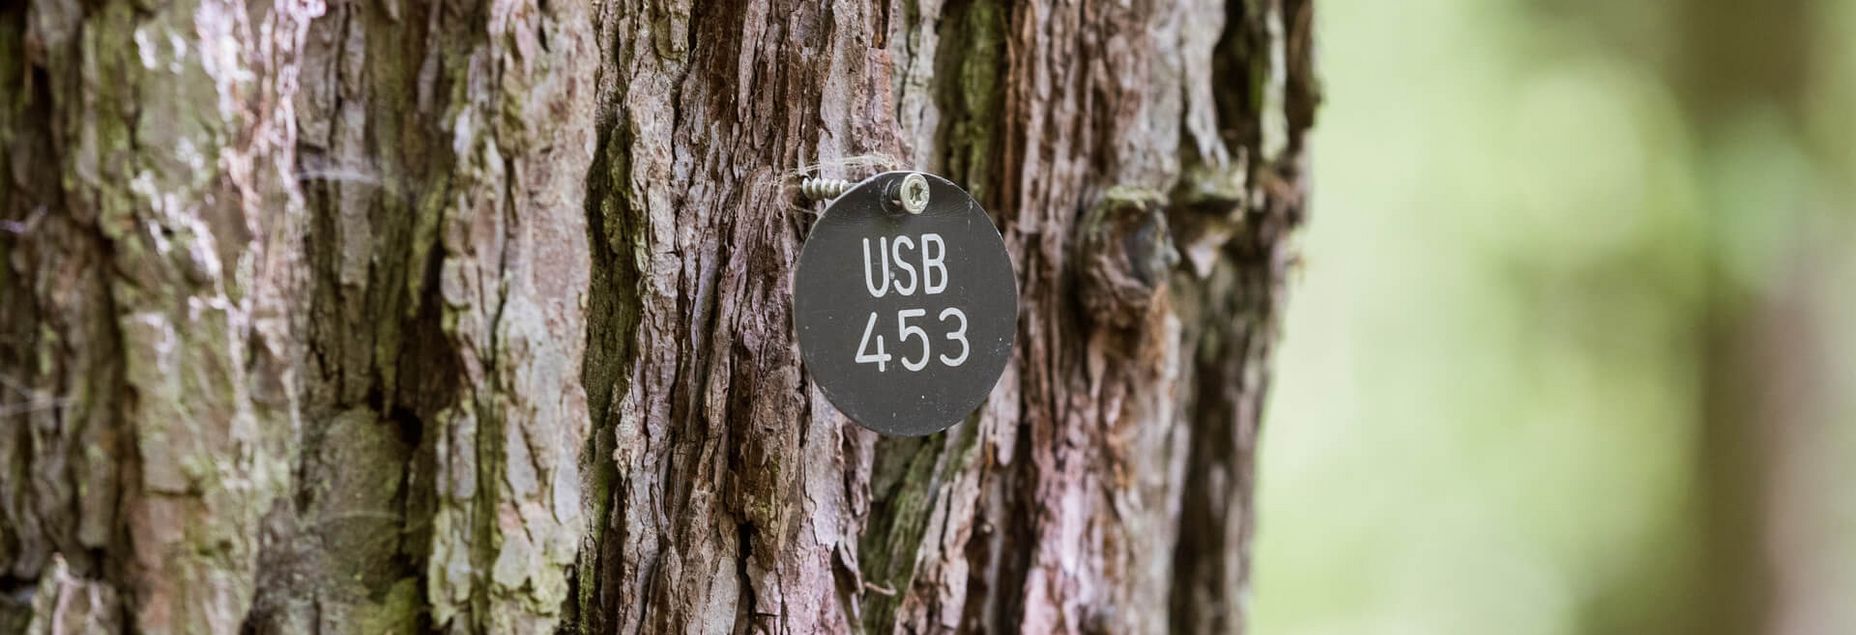 Baum USB 453 - Plakette